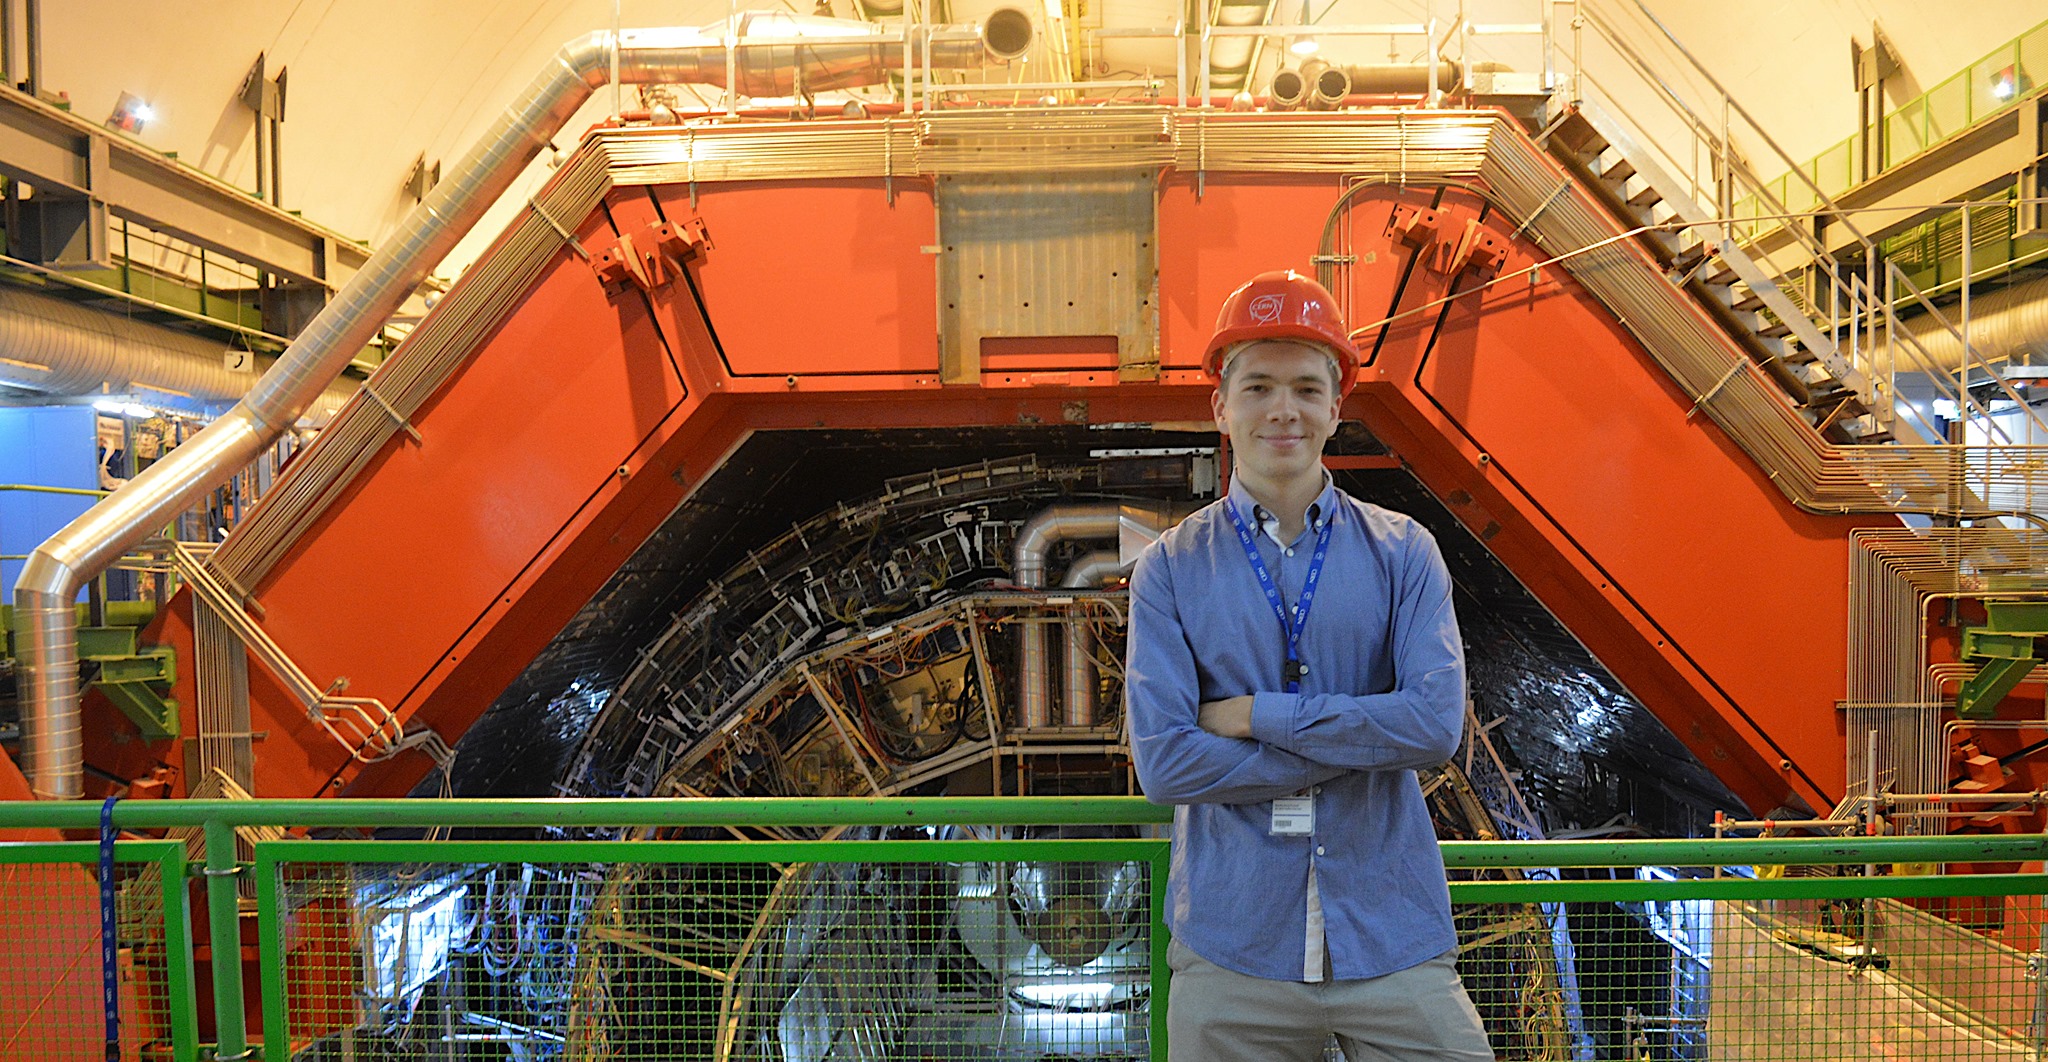 Experiments at CERN